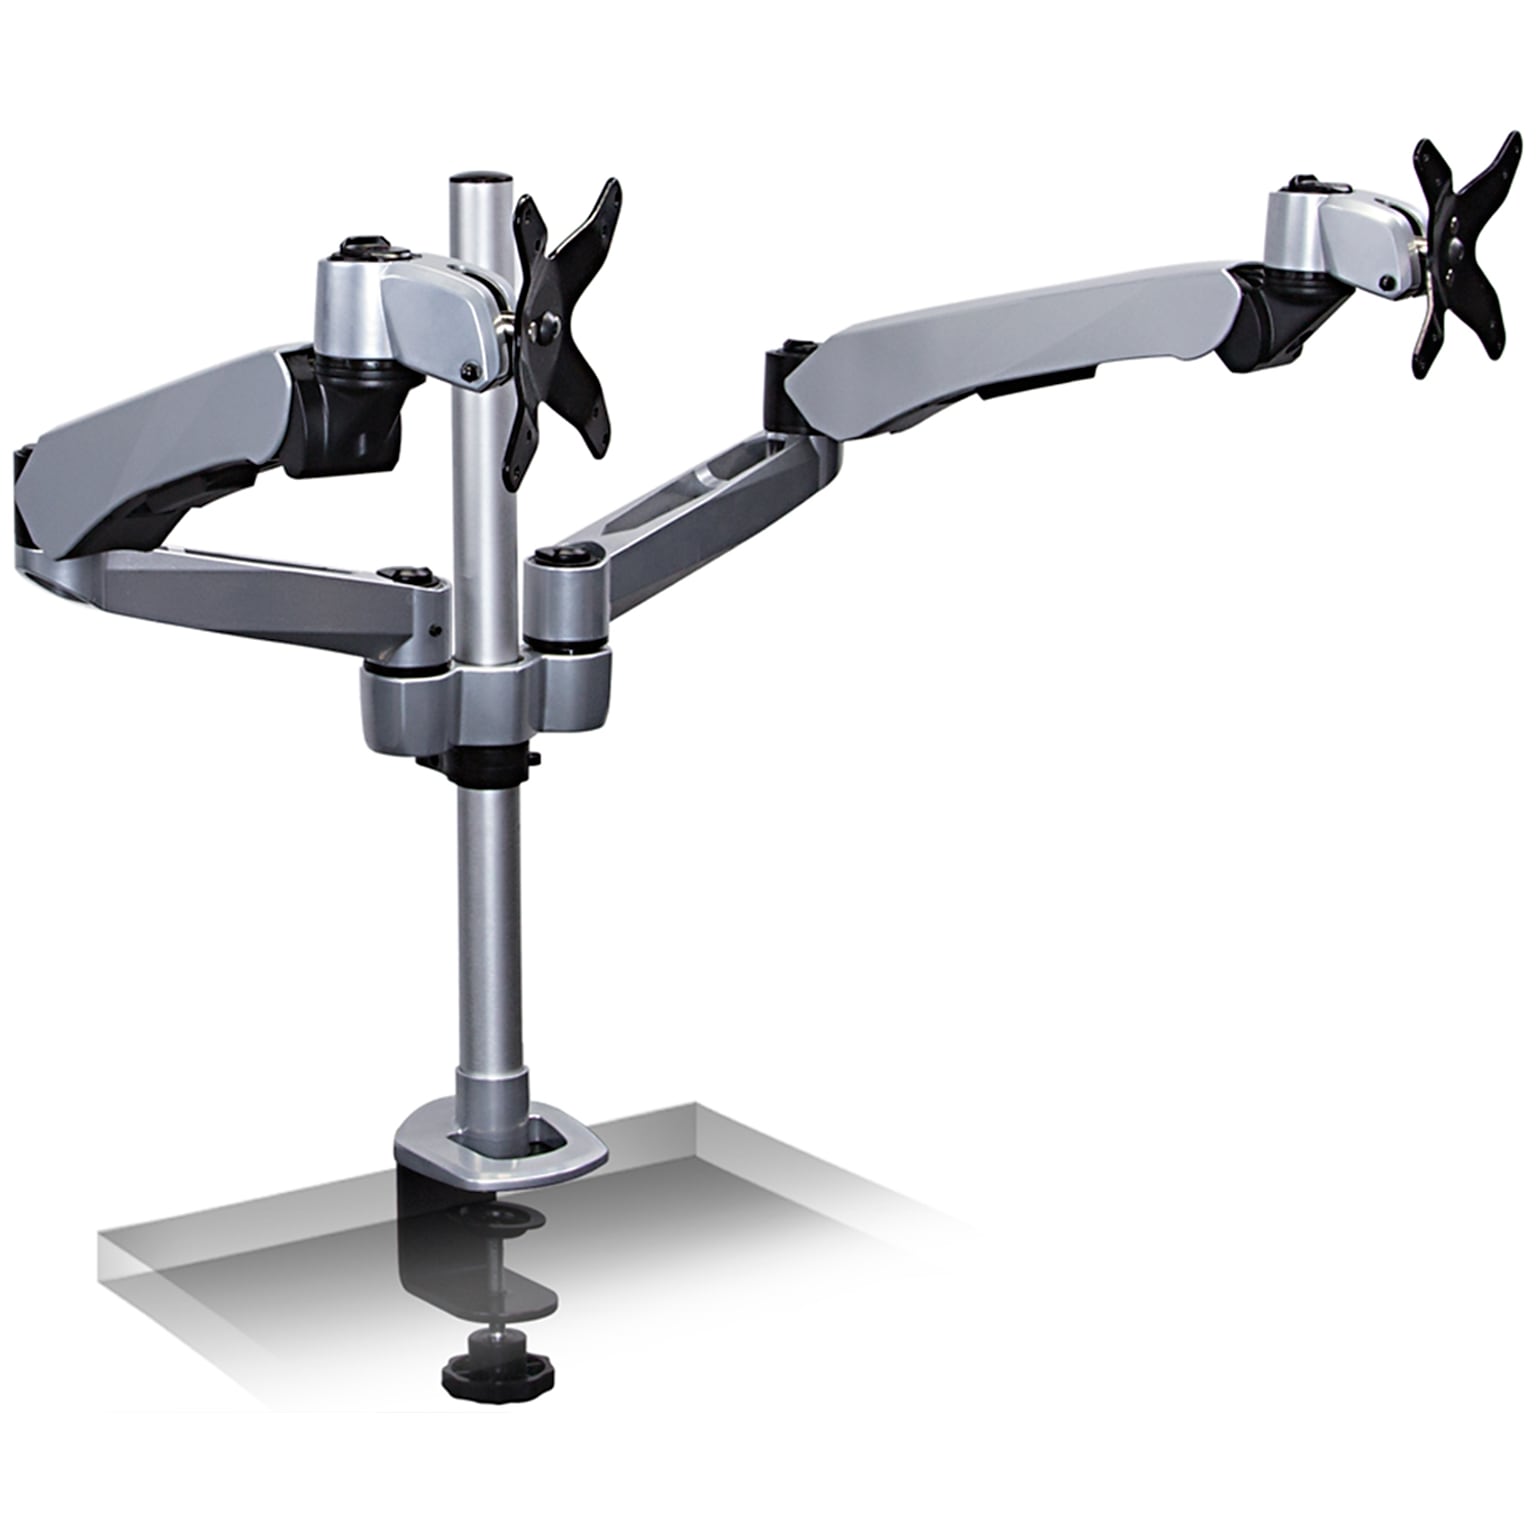 Mount-It! Modular Desk Mount Adjustable Monitor Arm, Up to 27 Monitors, Gray/Silver (MI-45116)